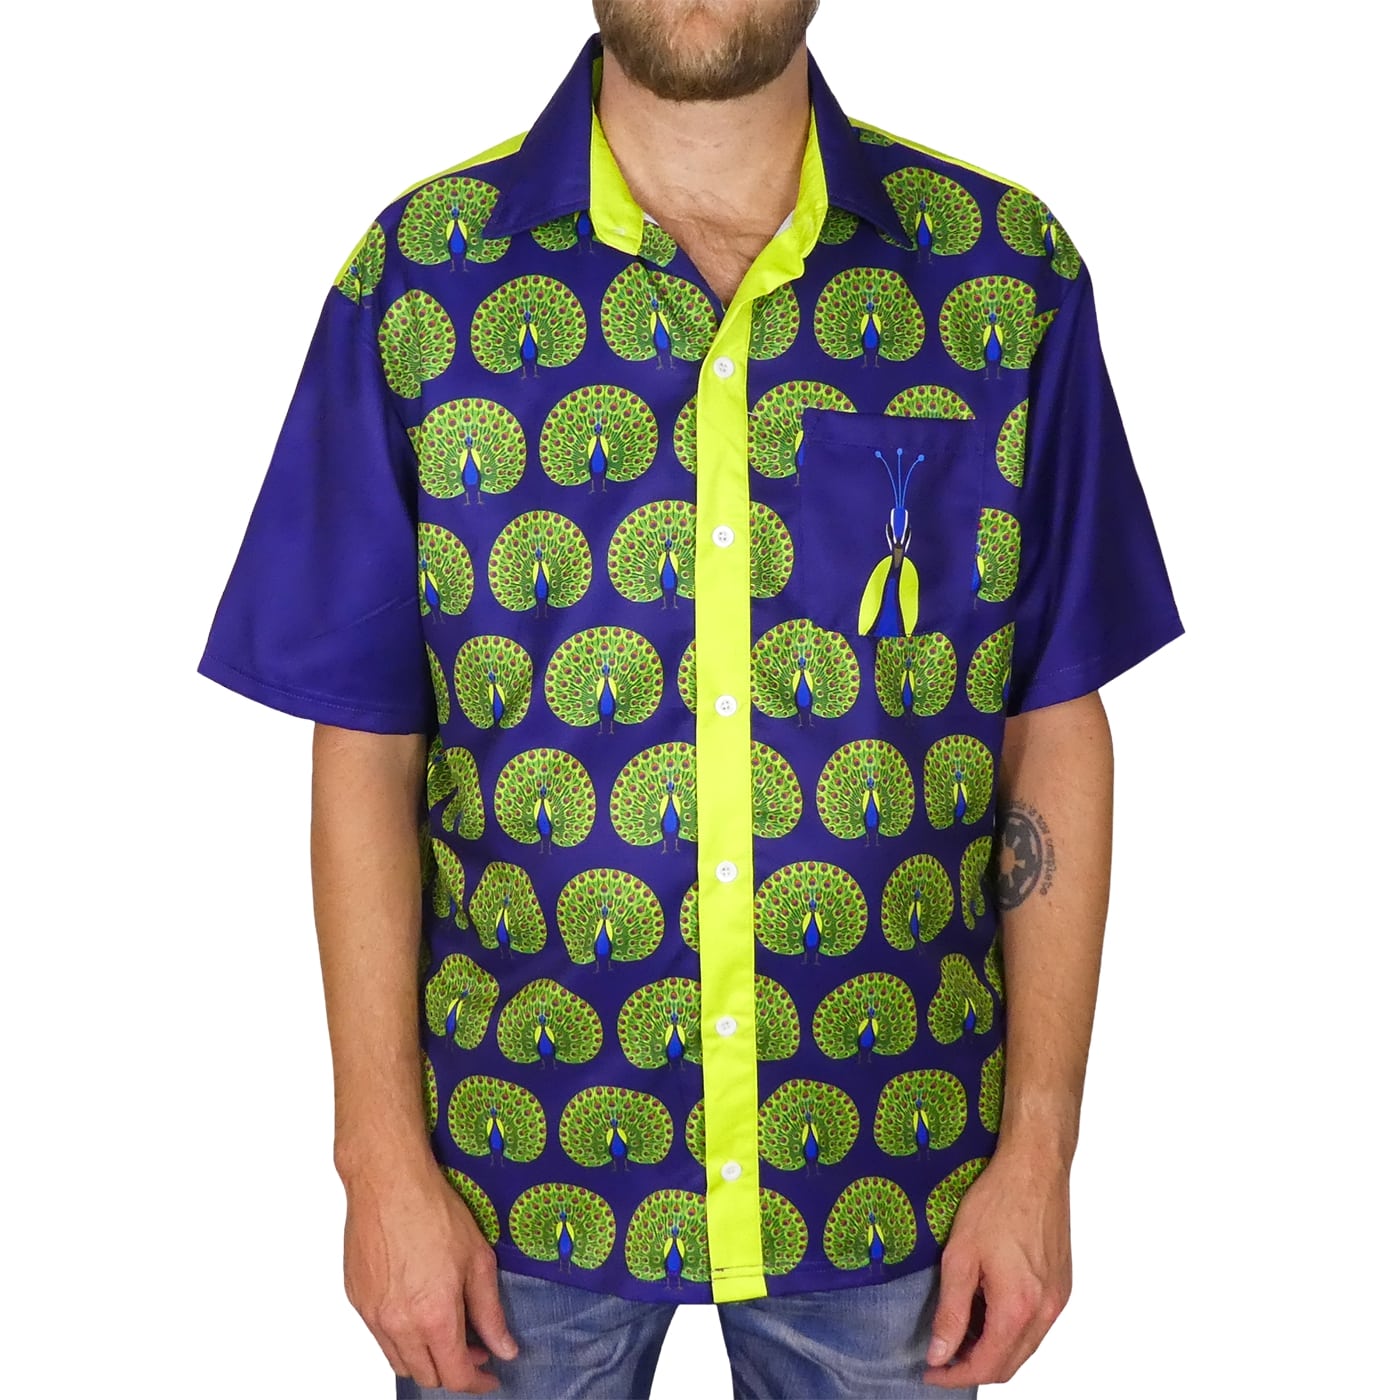 Olive Mens Shirt by RainbowsAndFairies.com (Peacock - Blue & Green - Bowling Shirt - Hawaiian Shirt - Rockabilly - Rock & Roll) - SKU: CL_SHIRT_OLIVE_MIN - Pic 01